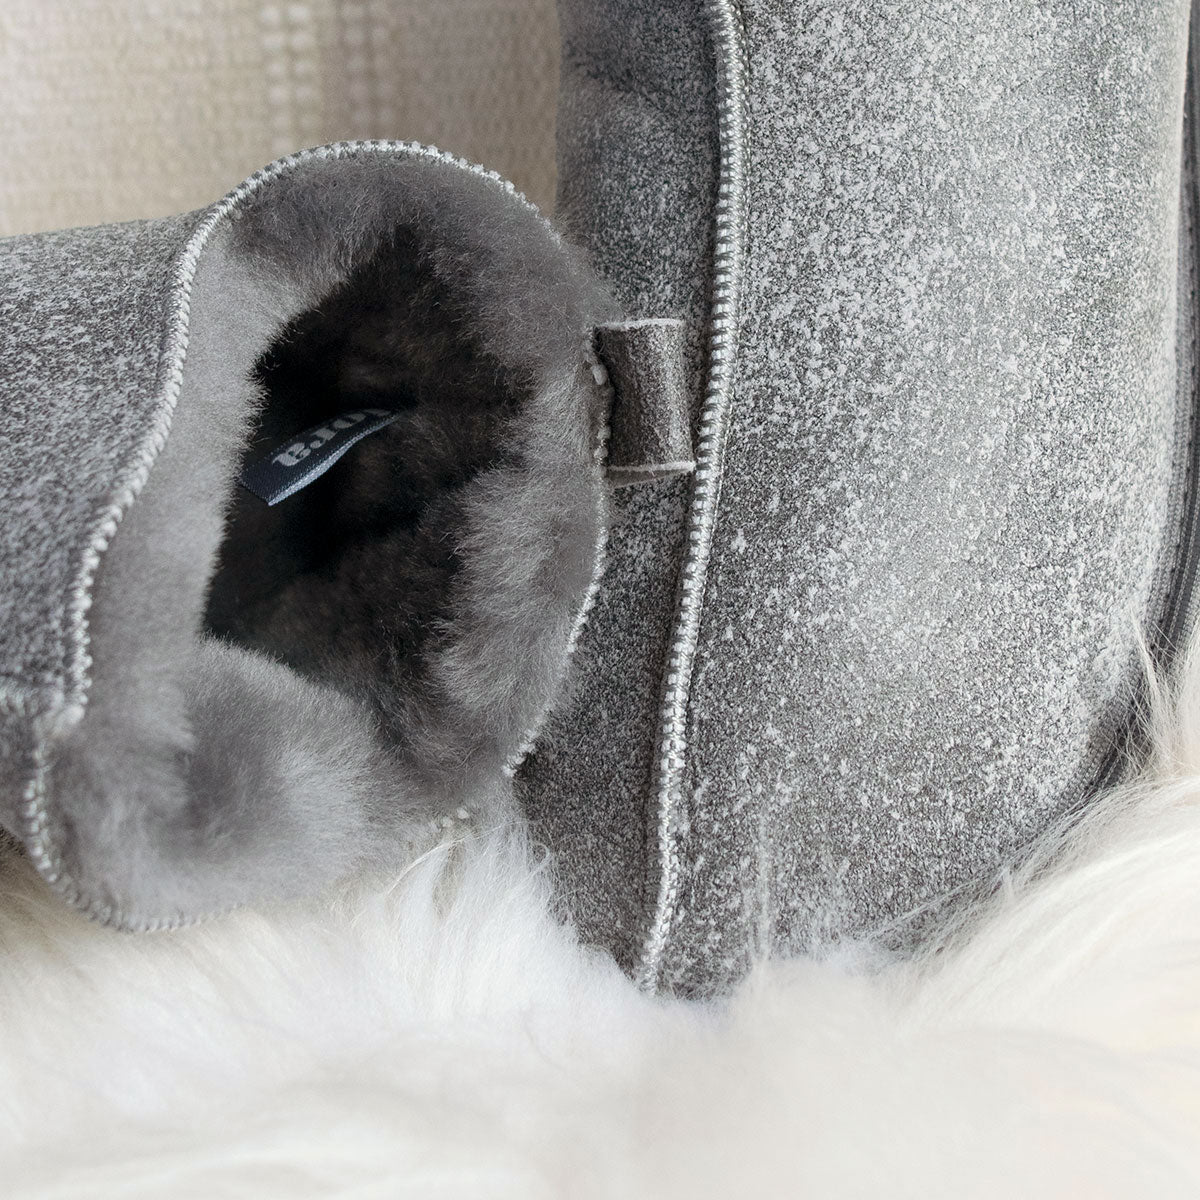 Alpin Sheepskin Slippers - Grey Distressed Leather